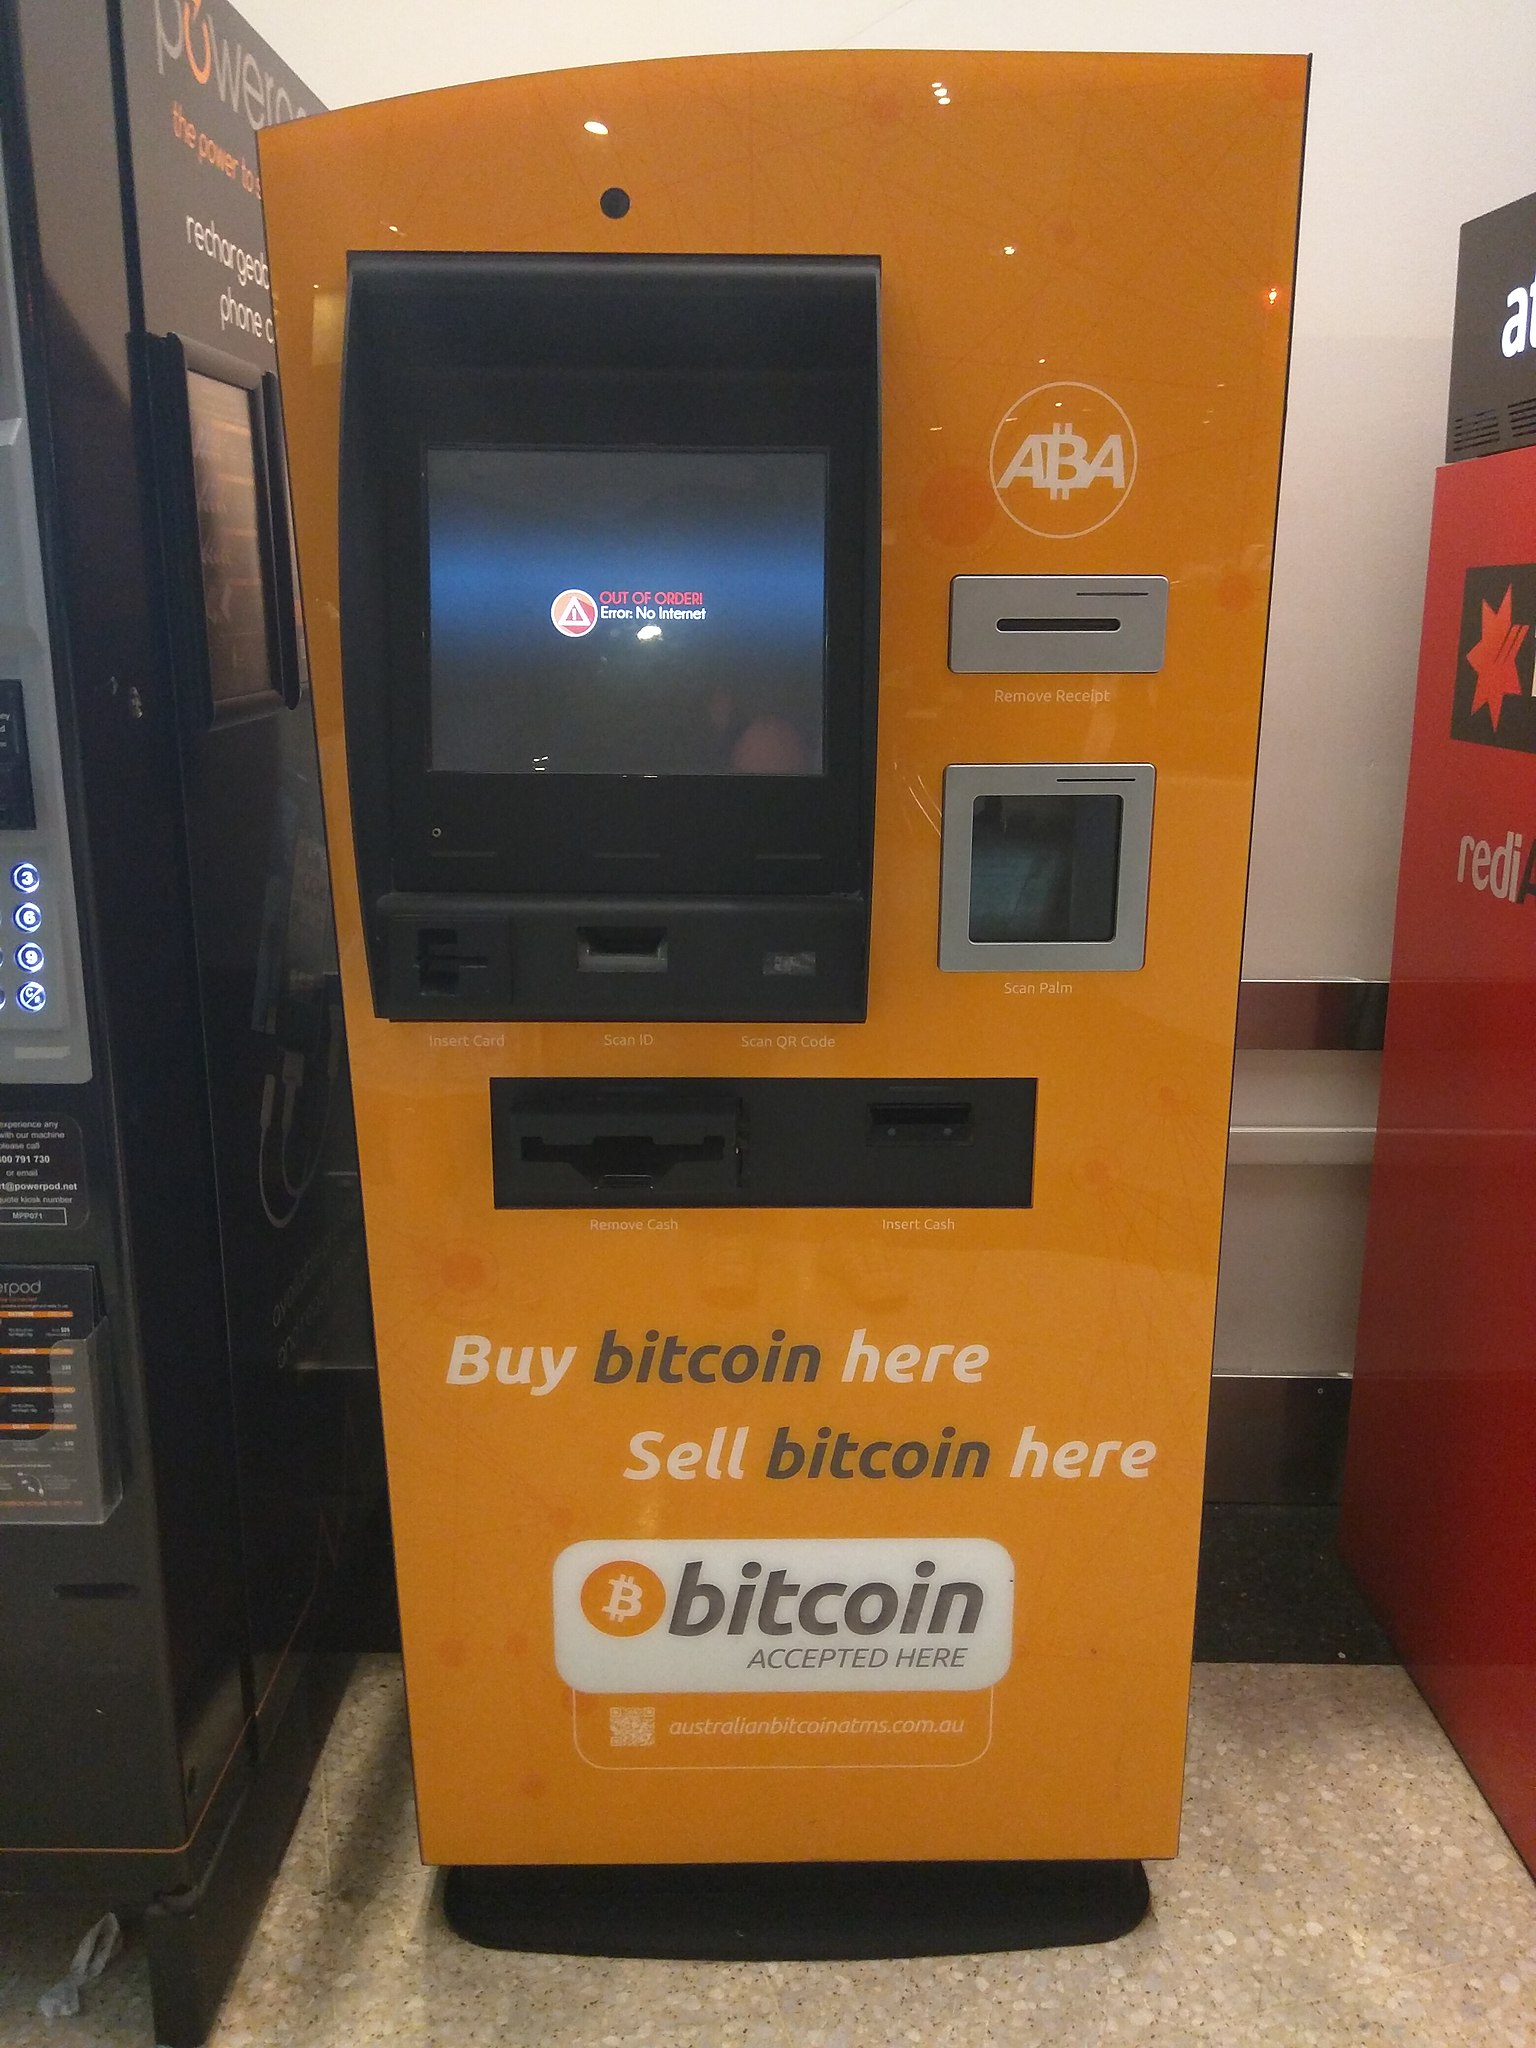 Bitcoin ATMs In Perth (45 locations found)